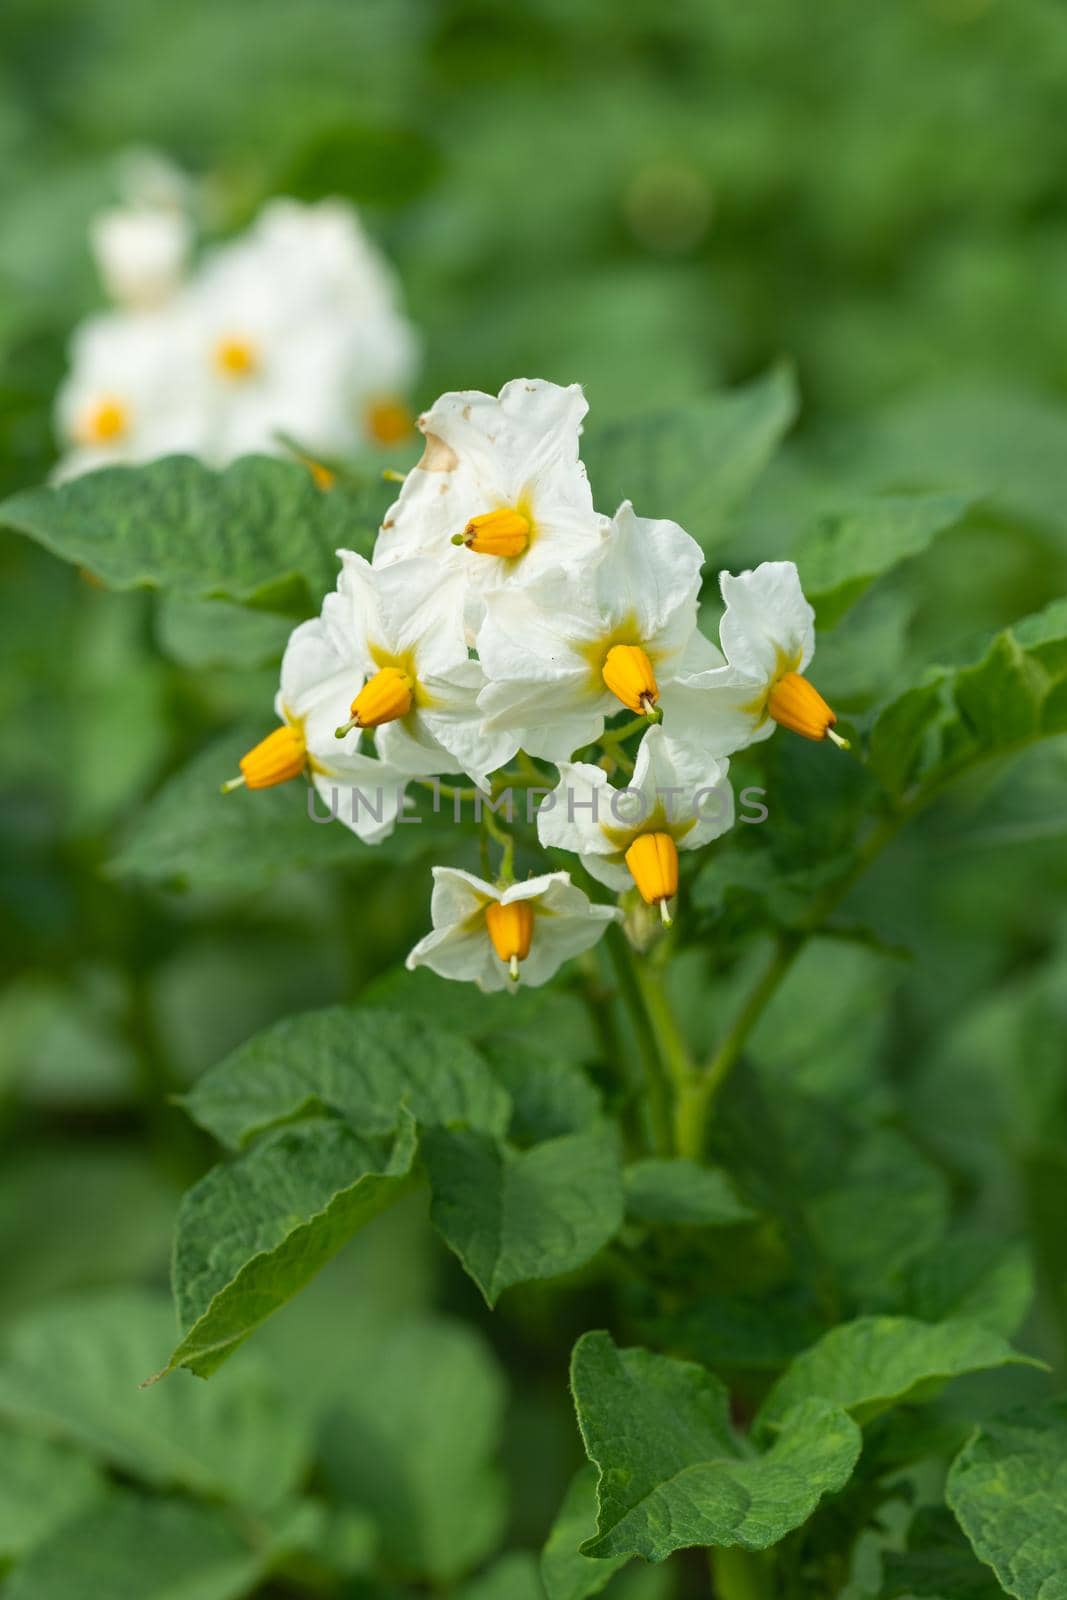 Blossom of potato plant (Solanum tuberosum)